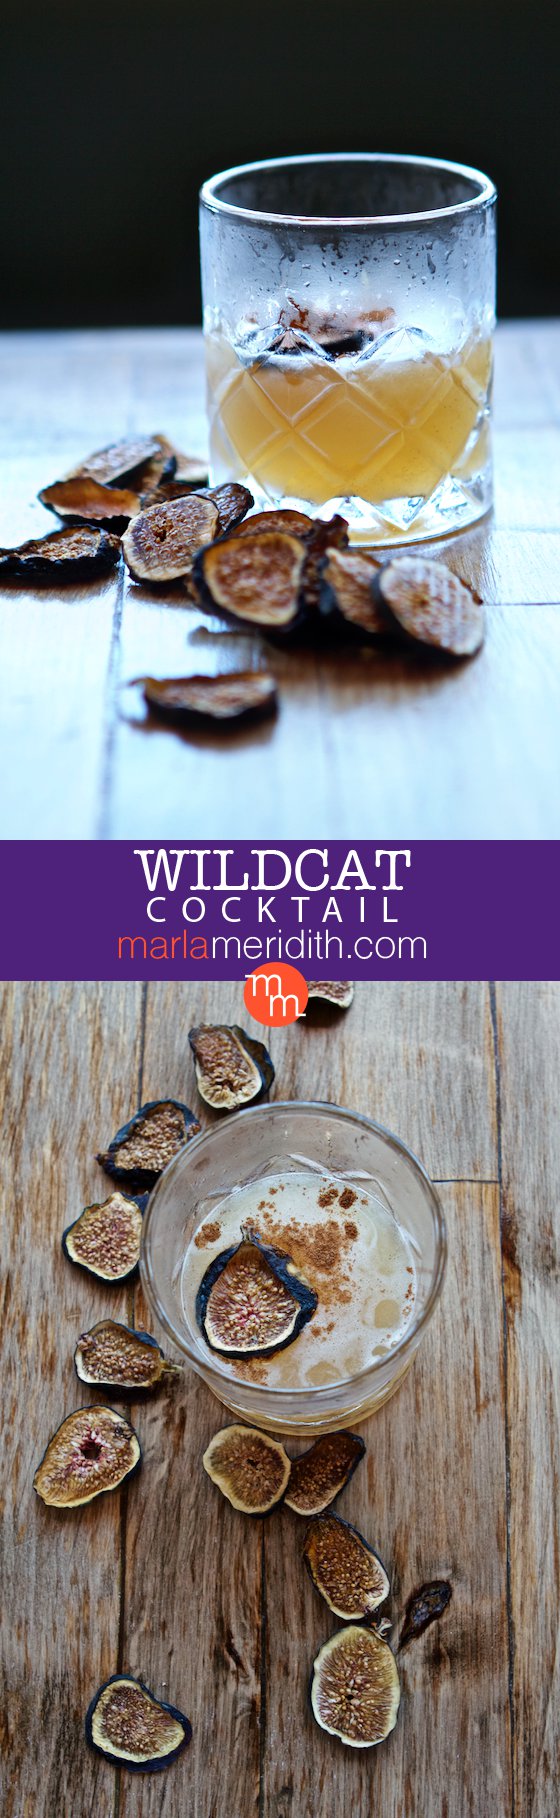 Wildcat Cocktail: A warming winter libation with bourbon, muddled pear, coriander, cinnamon & pine liquor. MarlaMeridith.com ( @marlameridith )